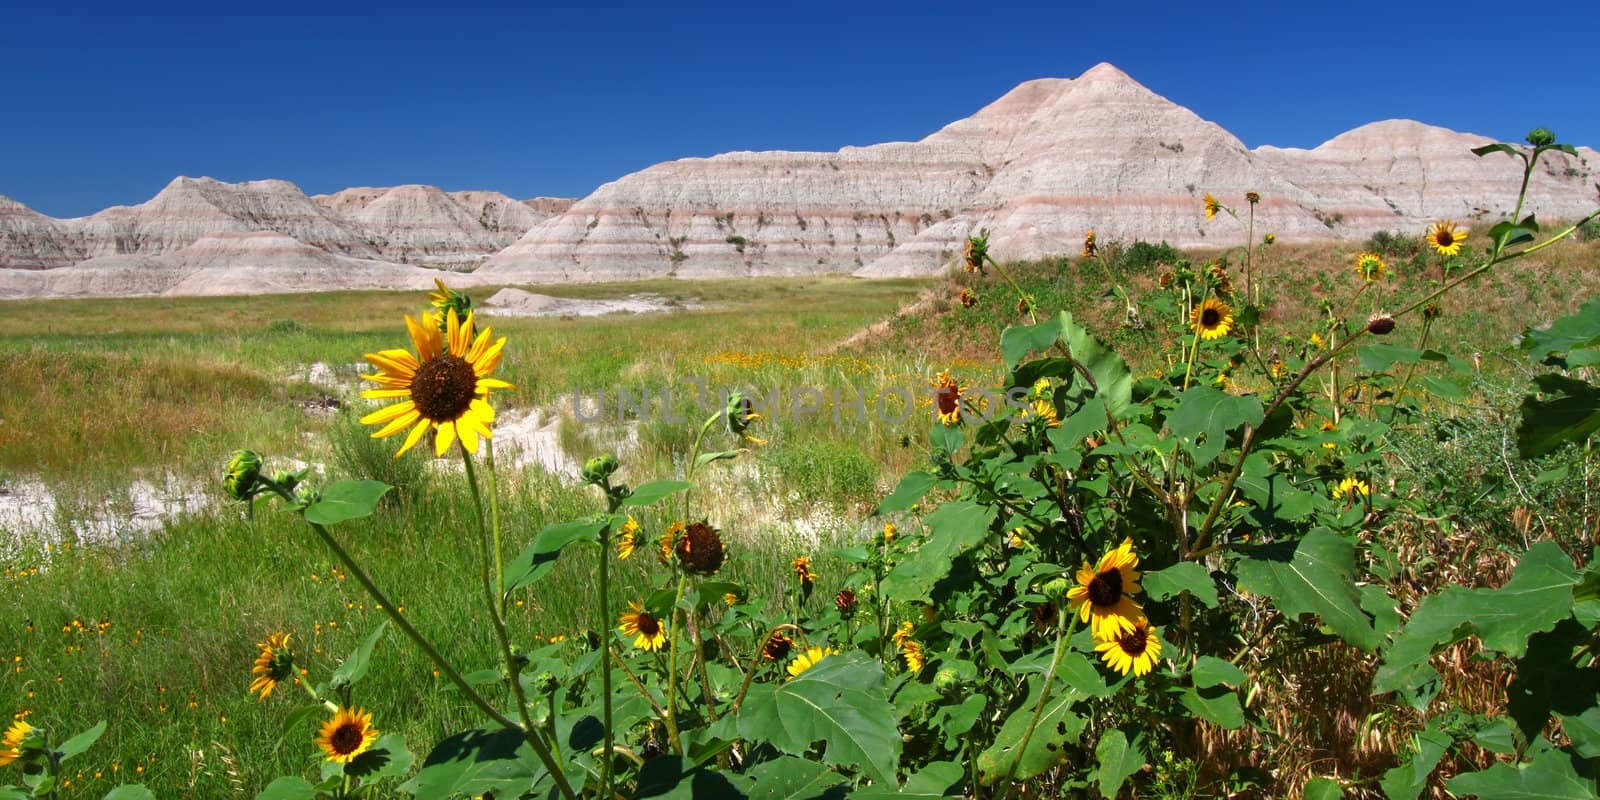 Wildflowers amid the arid landscape of Badlands National Park - South Dakota.